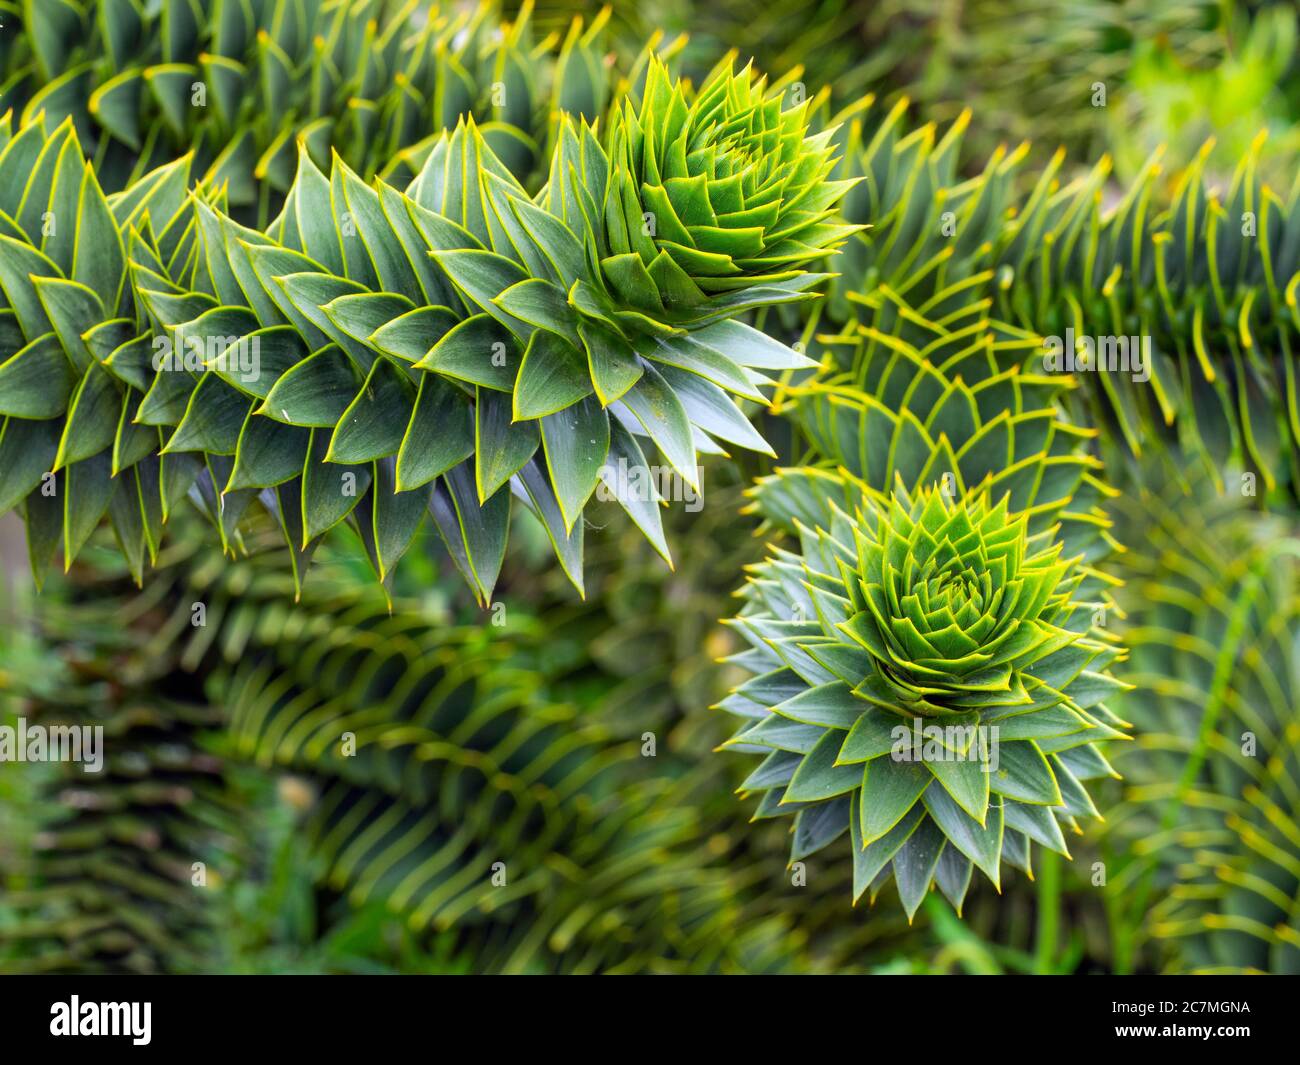 Araucaria araucana - Chile Pine or Monkey Puzzle tree Stock Photo